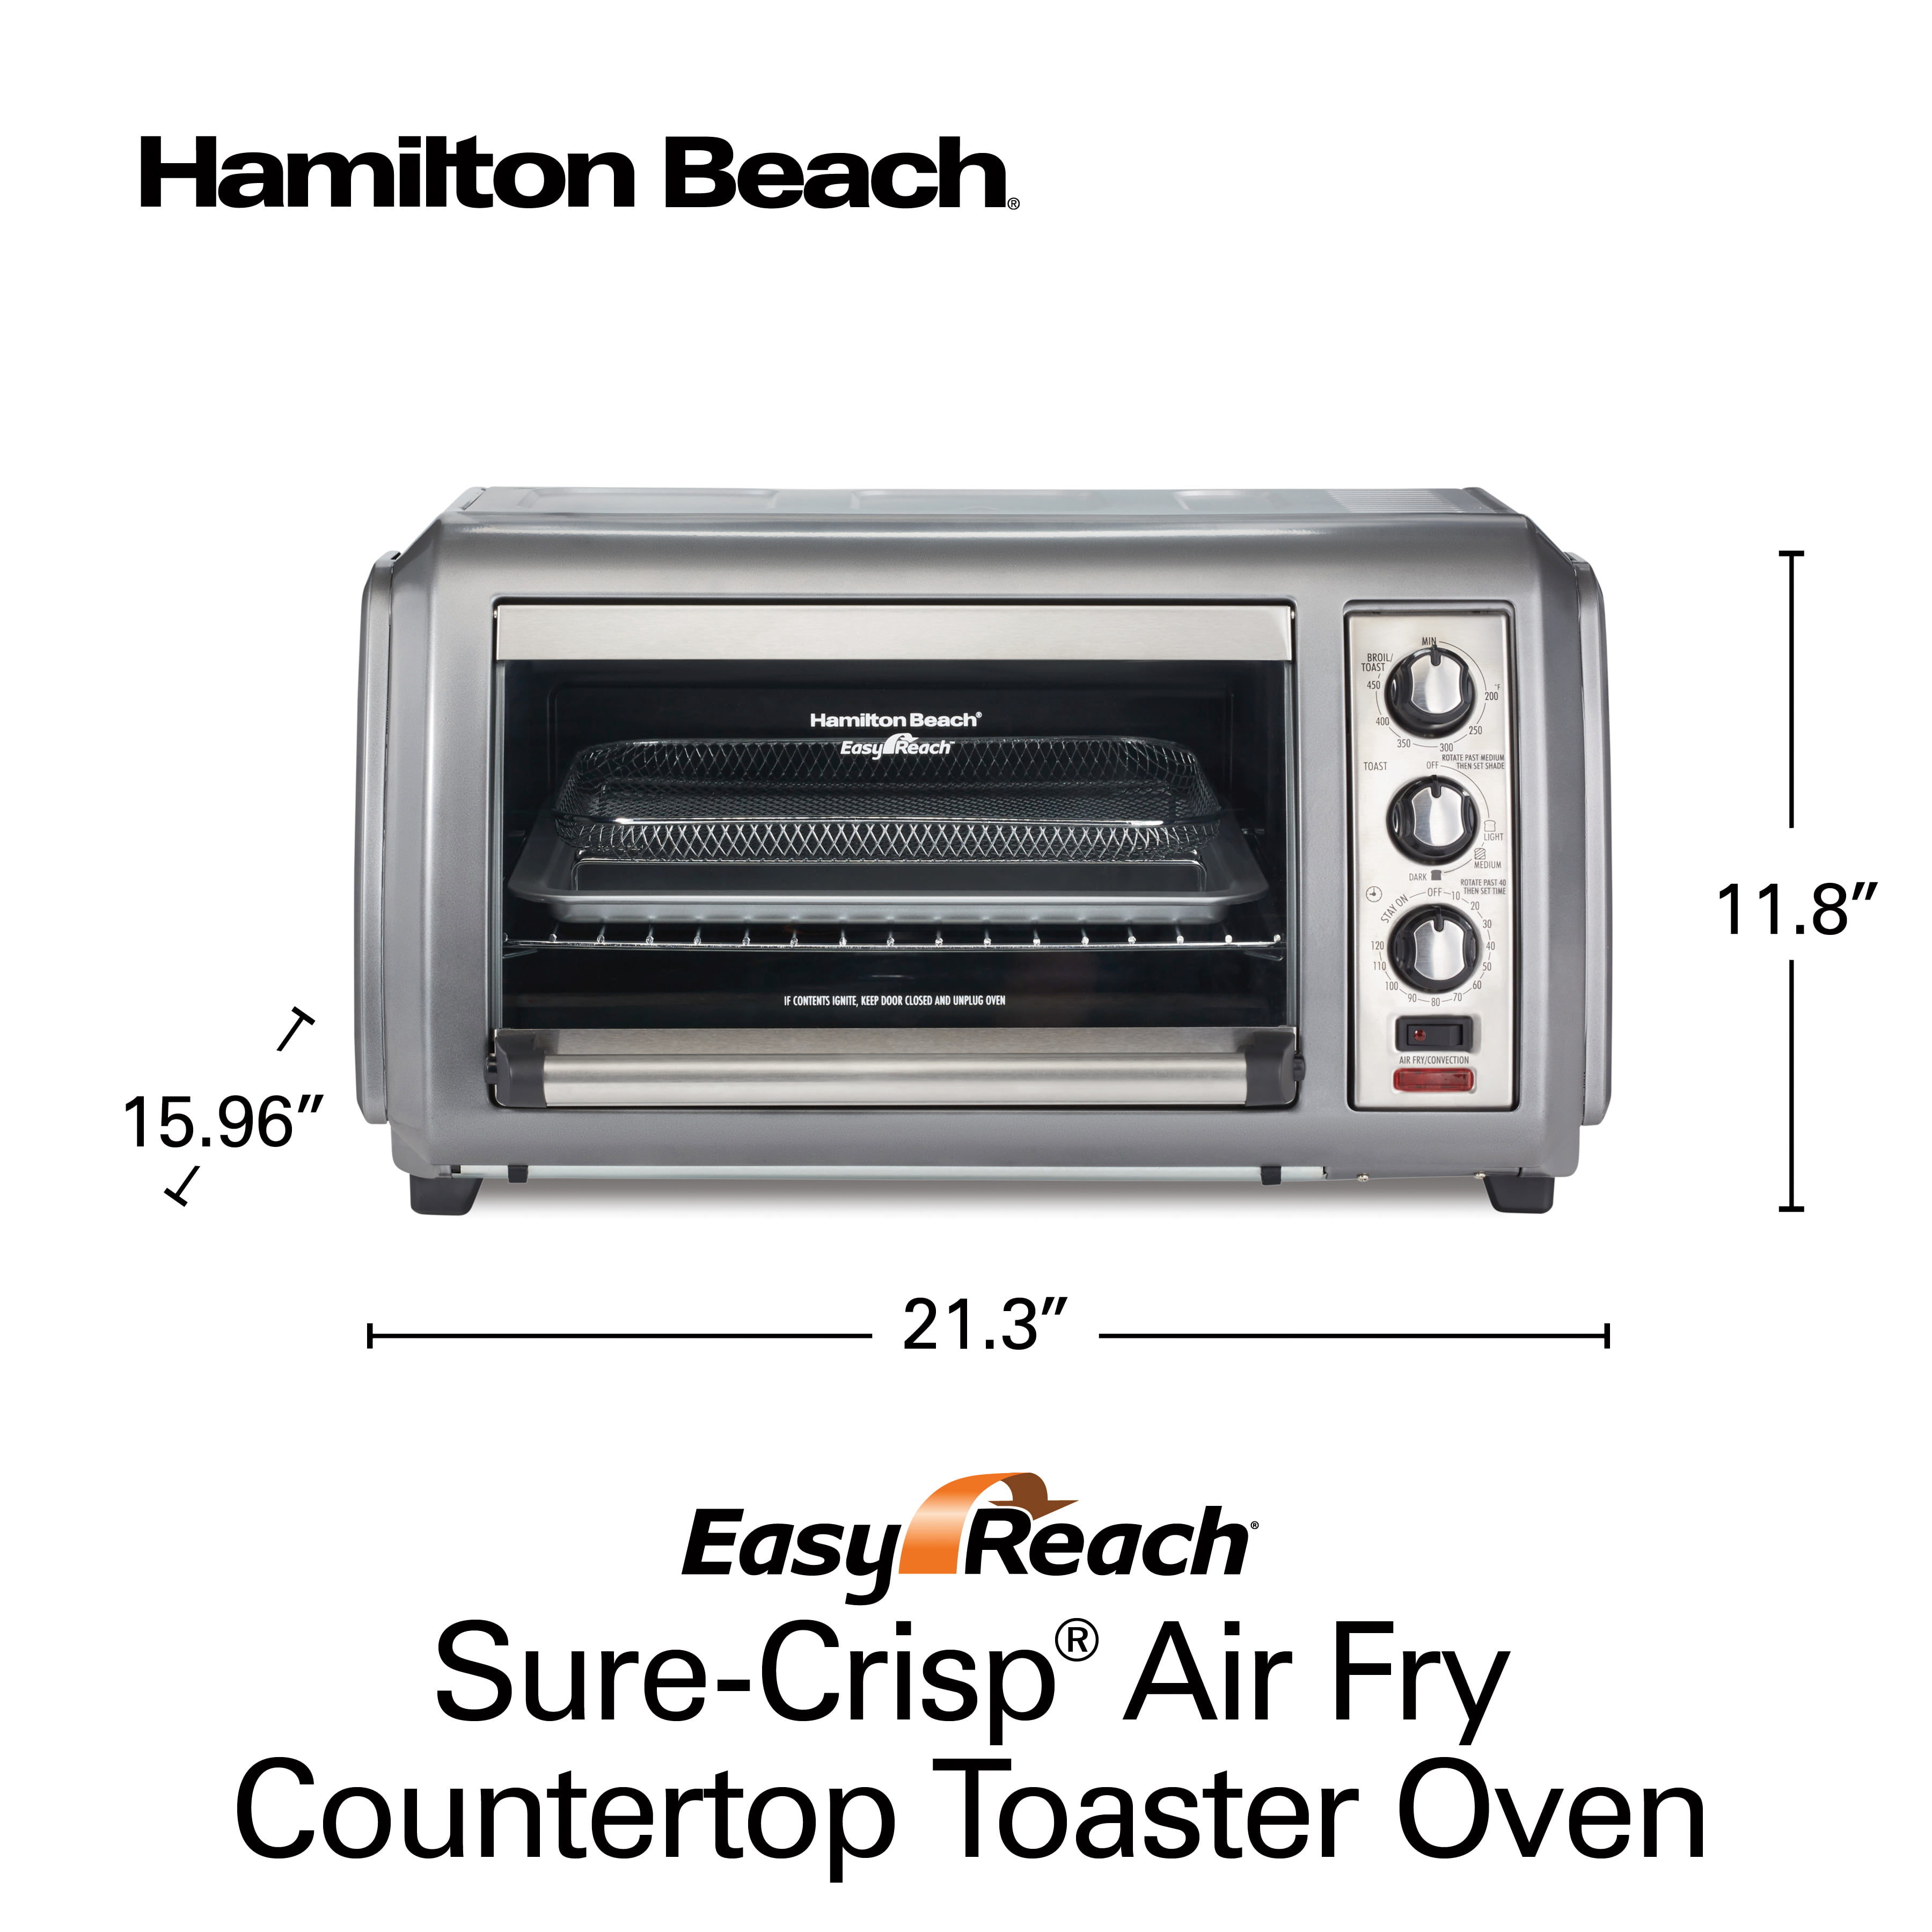 Hamilton Beach Sure-Crisp Air Fryer Countertop Toaster Oven with 